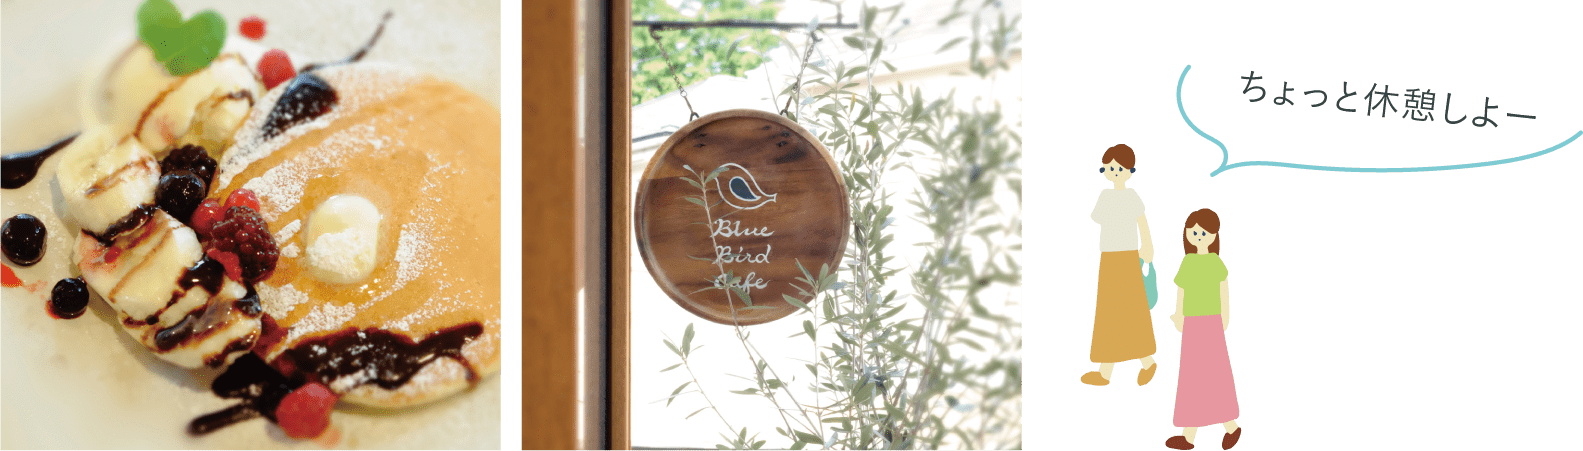 Blue Bird Cafe & Atelier